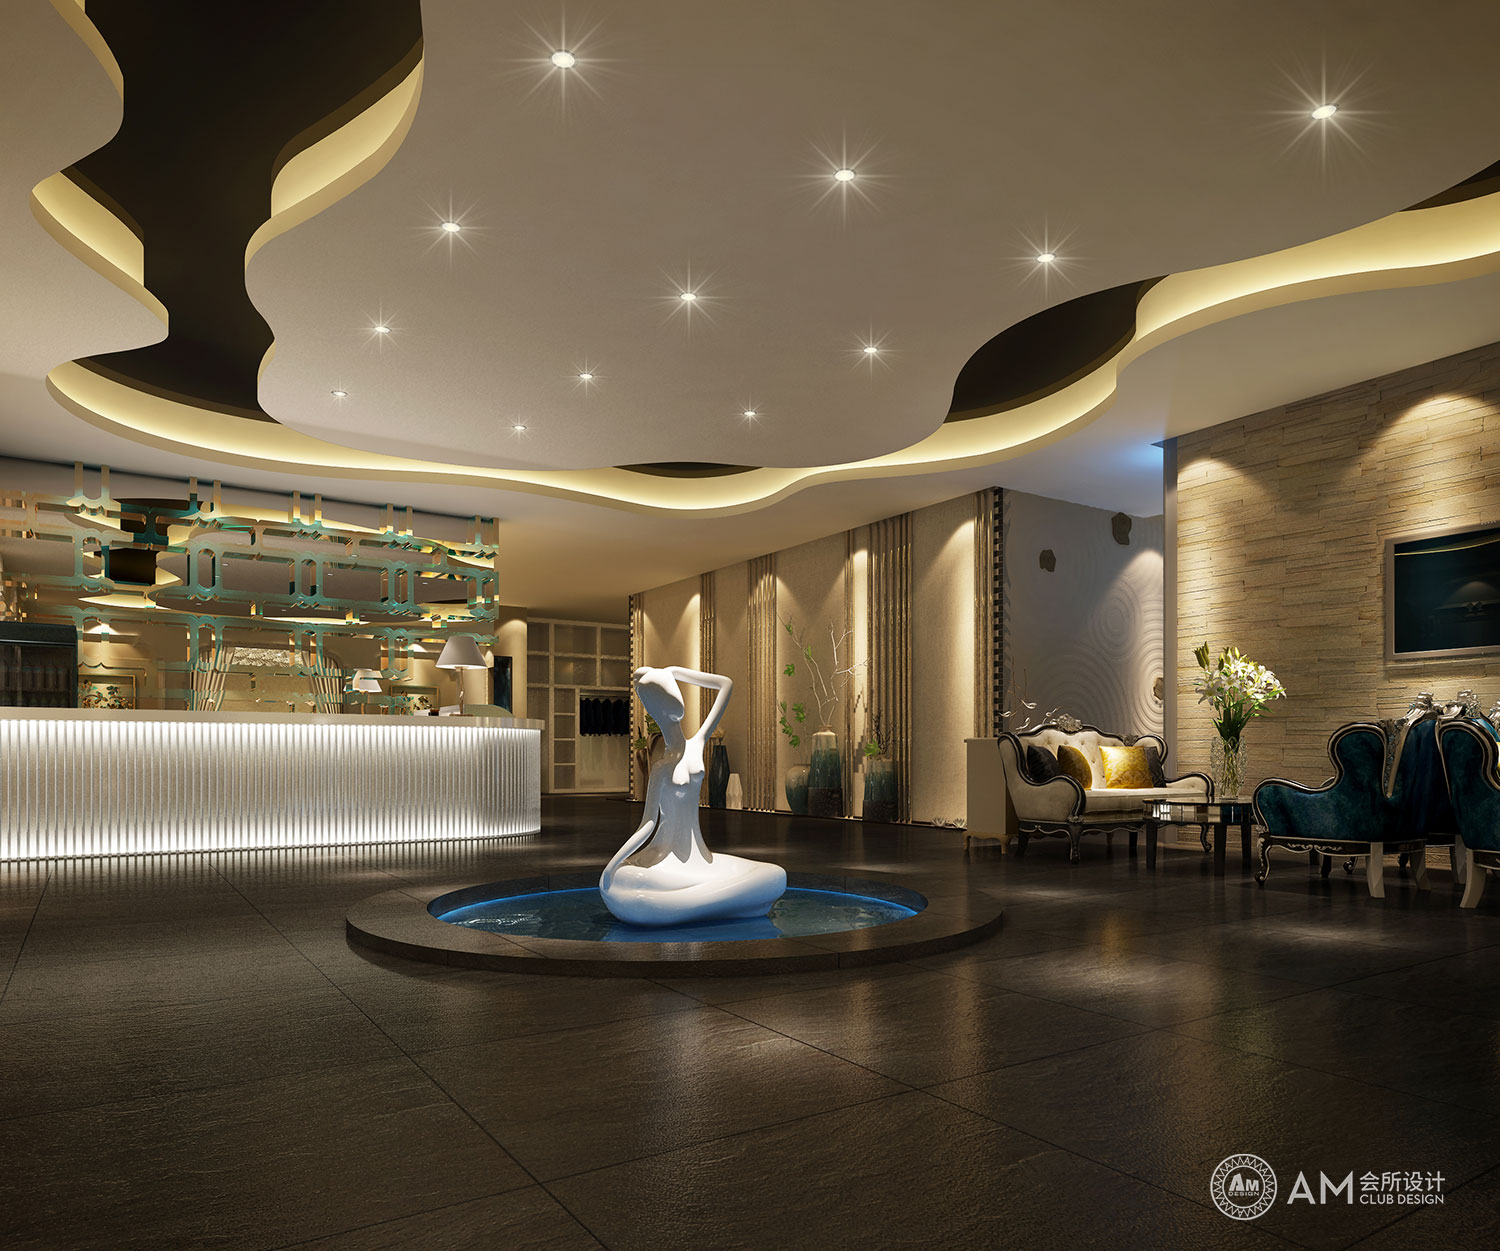 AM DESIGN | Hall design of huajiantang high temperature Yoga Club